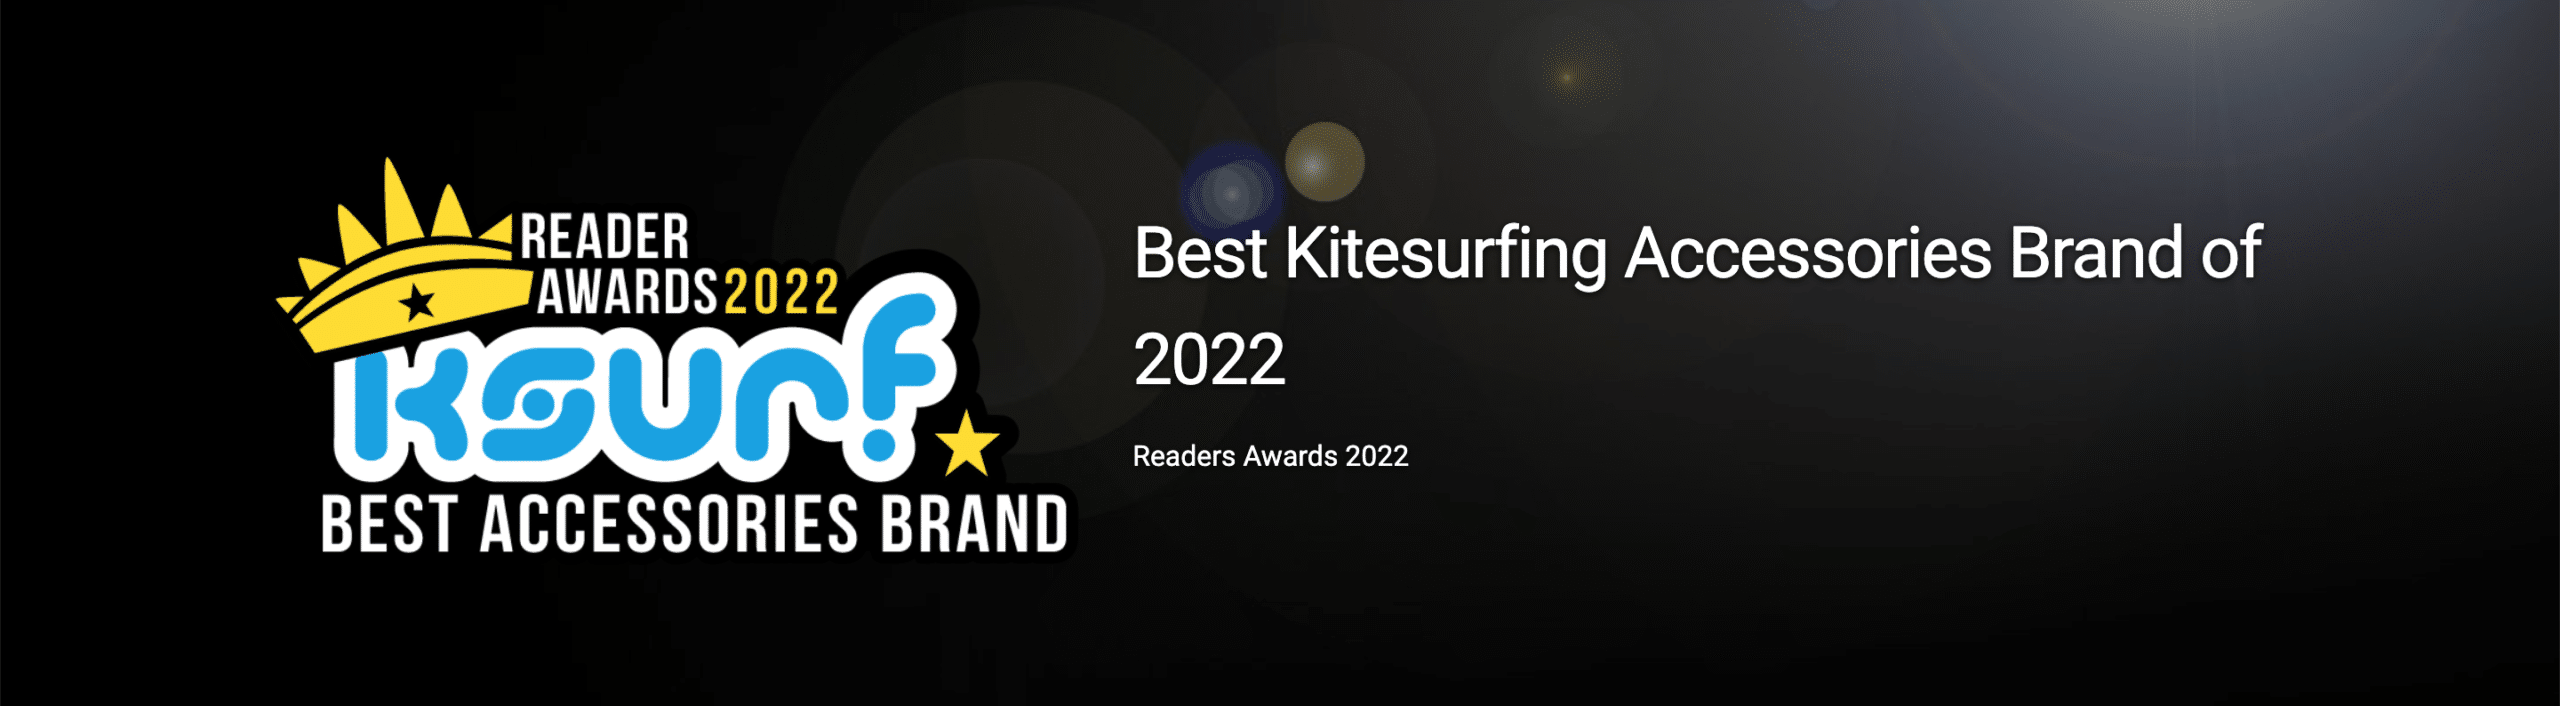 akdurablesupplyco-IKSurf AK Best Kitesurfing Accessories Brand of 2022IKSurf x Tonic AwardsNews